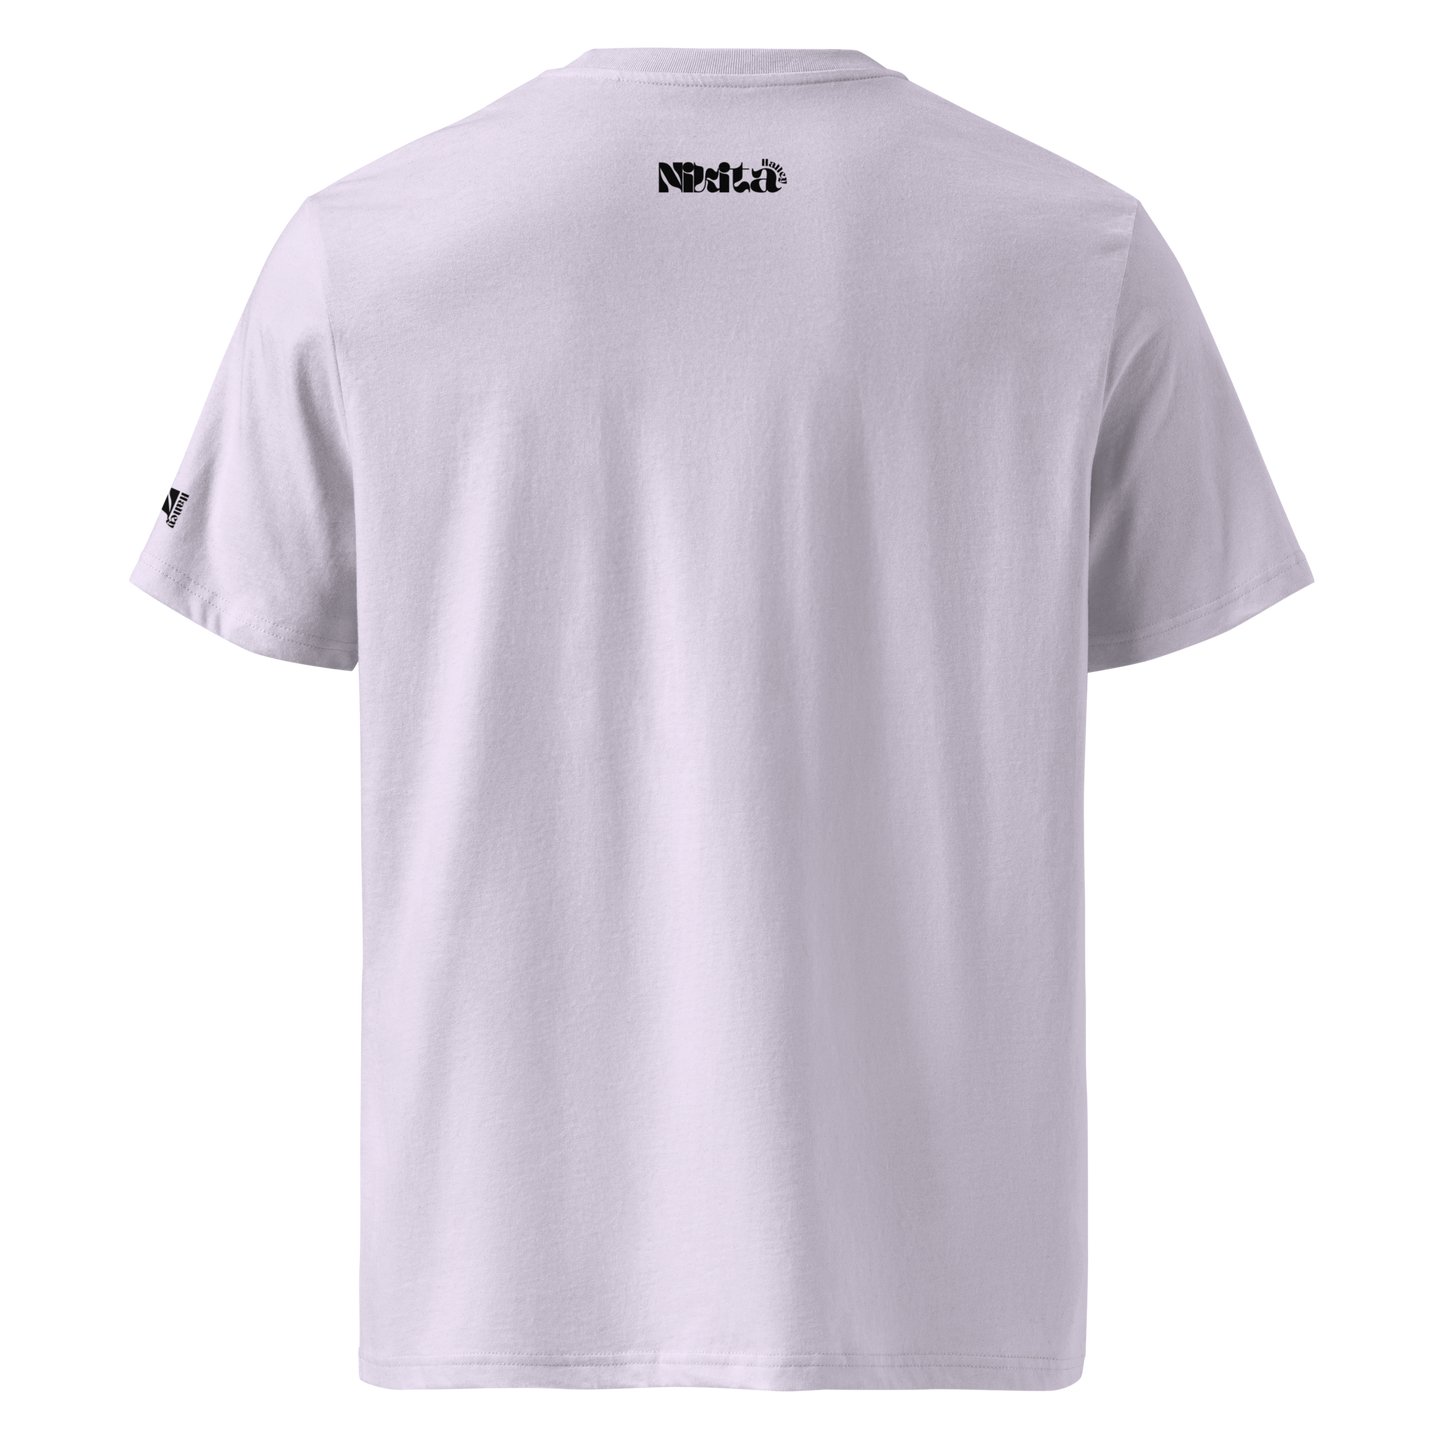 Waves T-shirt (organic cotton)